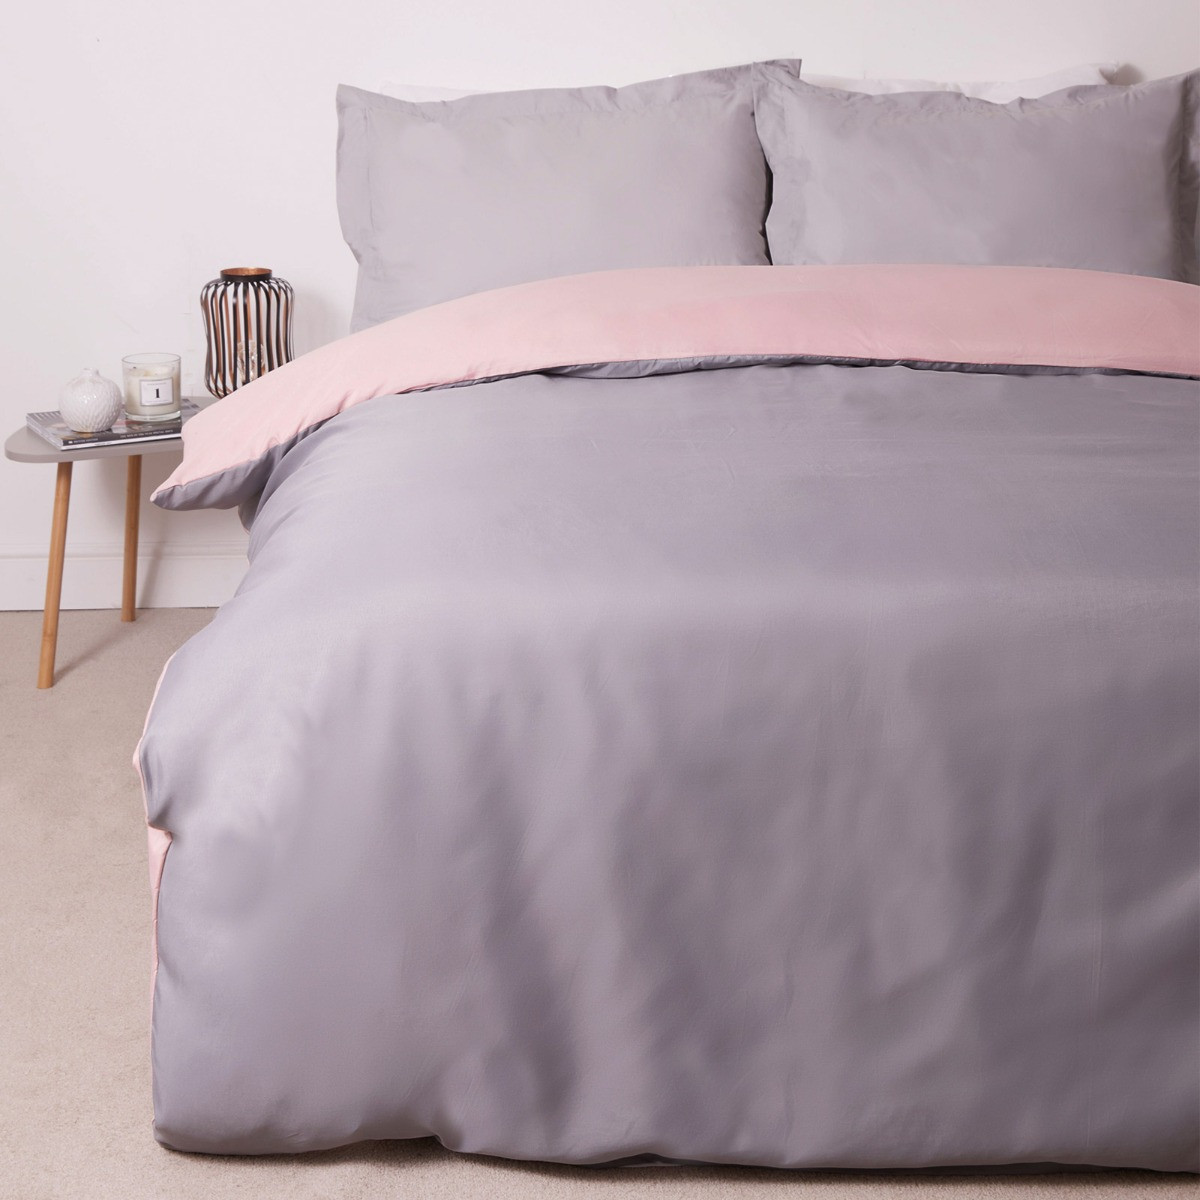 Brentfords Plain Dye Duvet Cover Set with Oxford Pillowcase - Blush Pink / Grey>